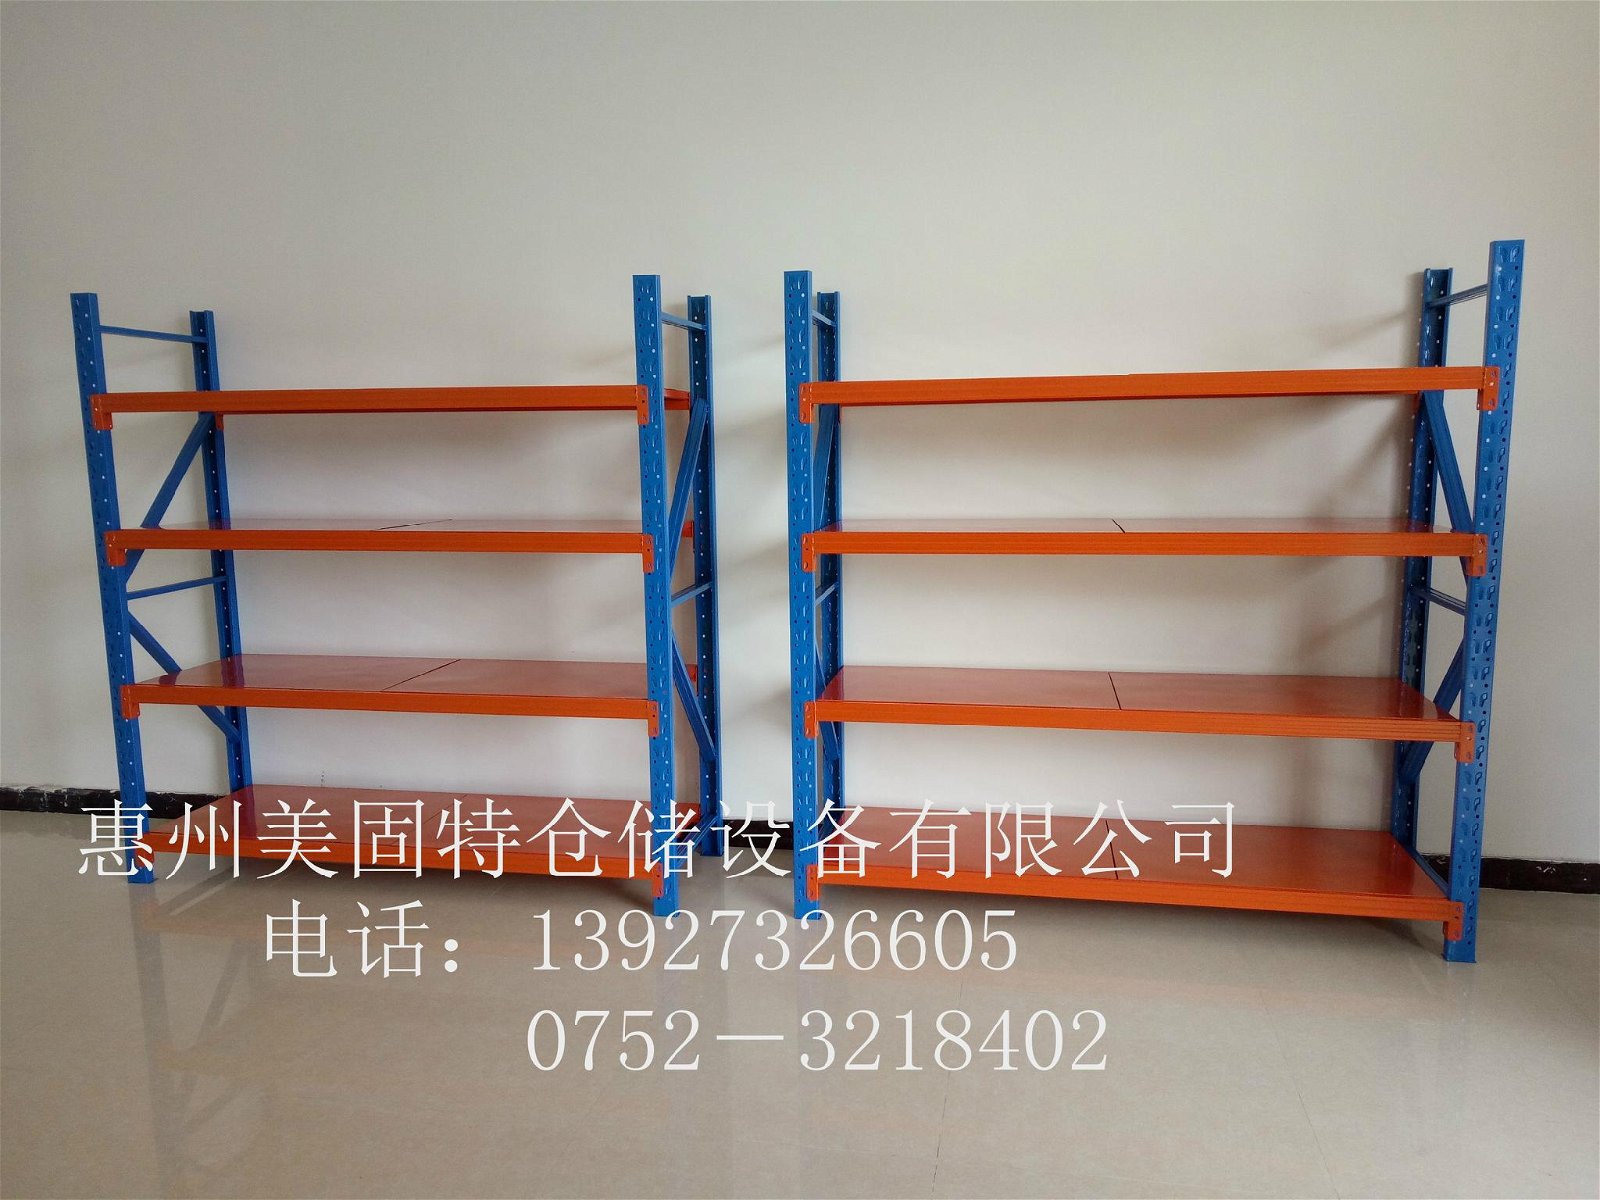 Huizhou medium storage shelves factory bearing 200 kg